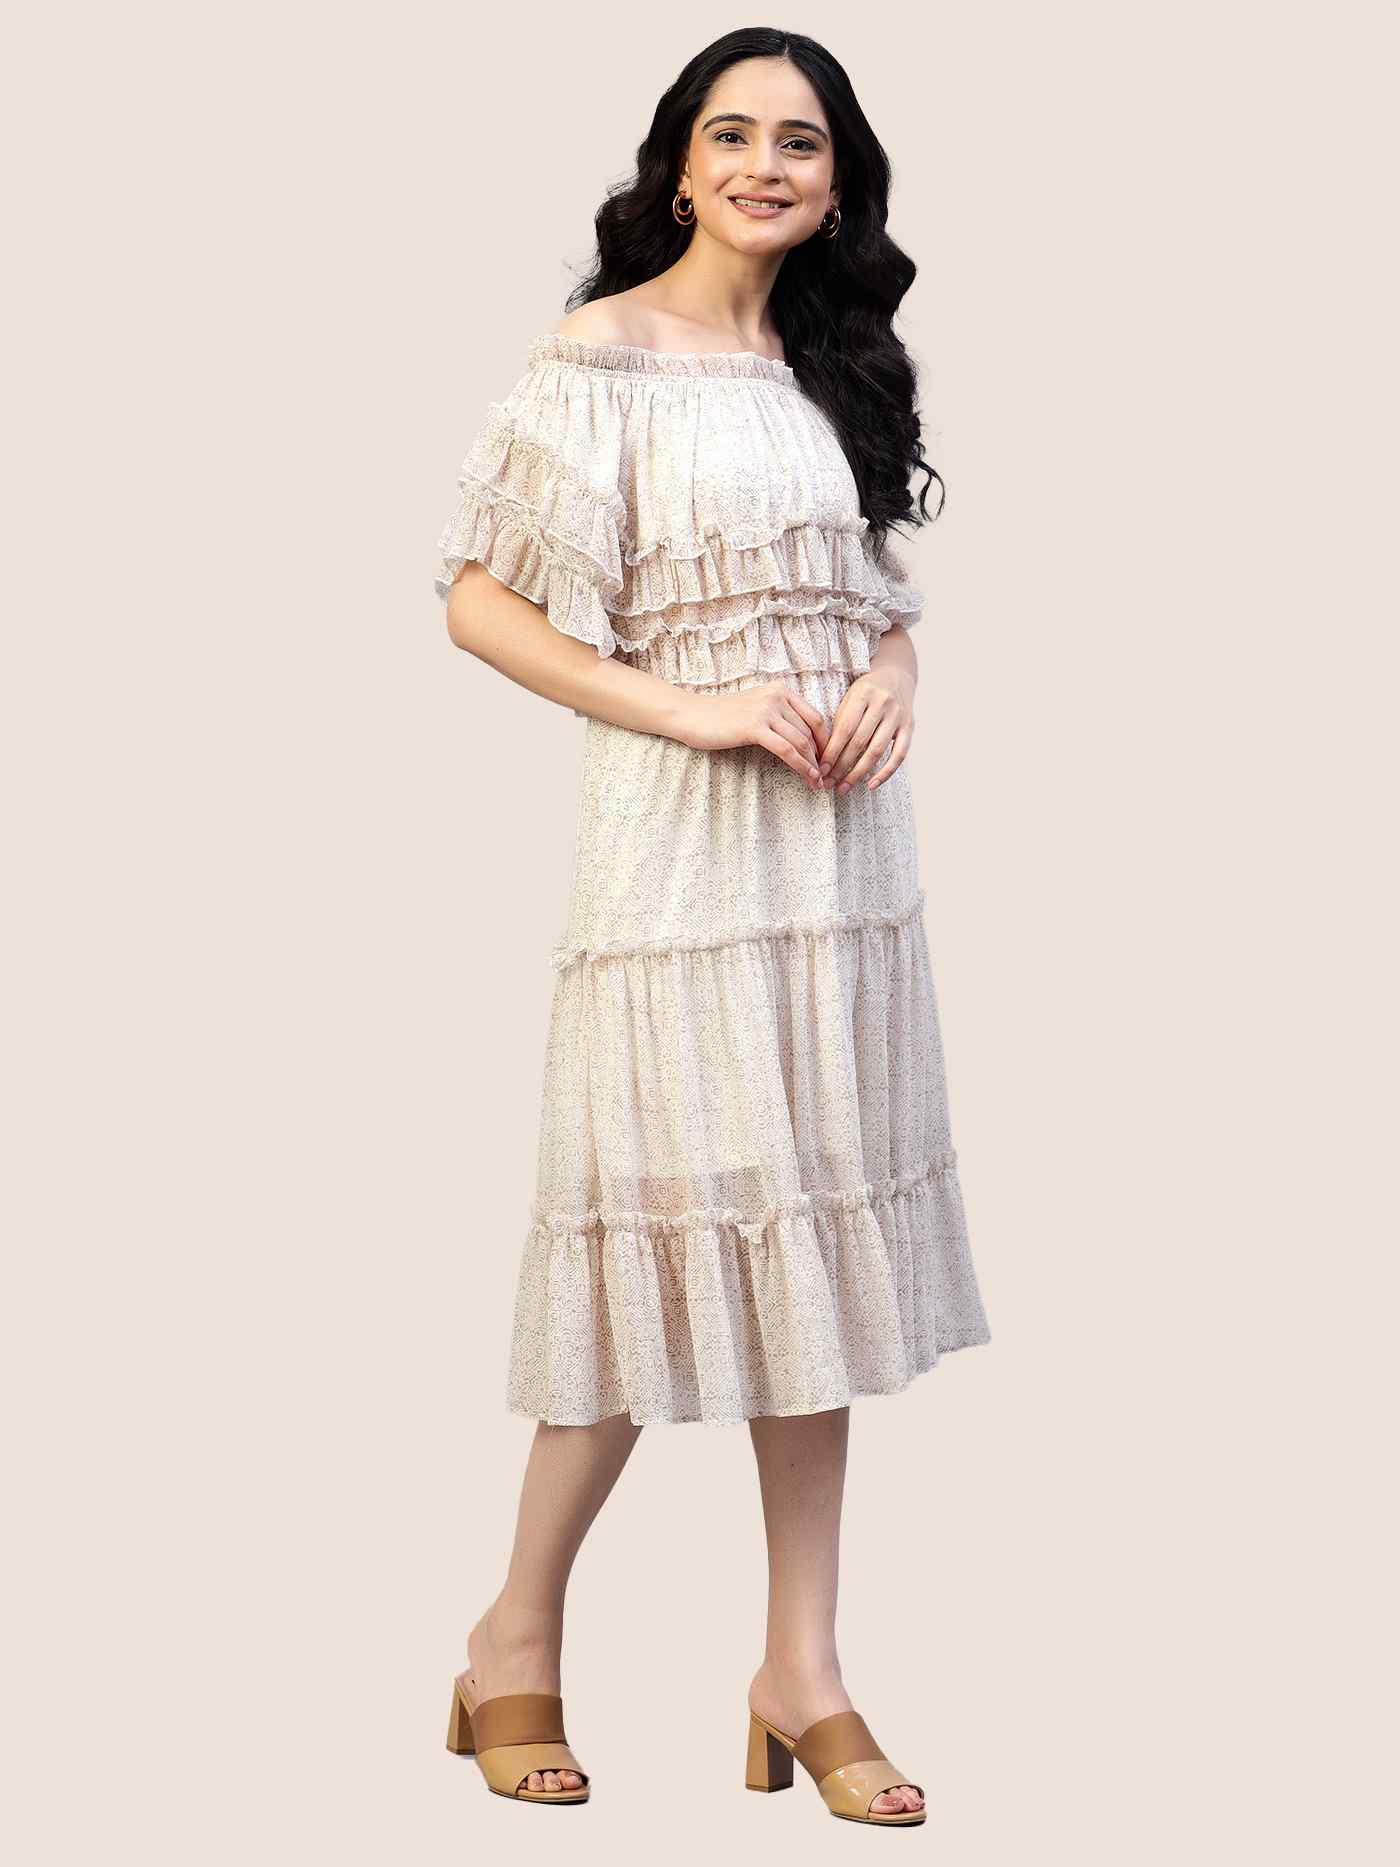 Printed off-shoulder Chiffon Dress